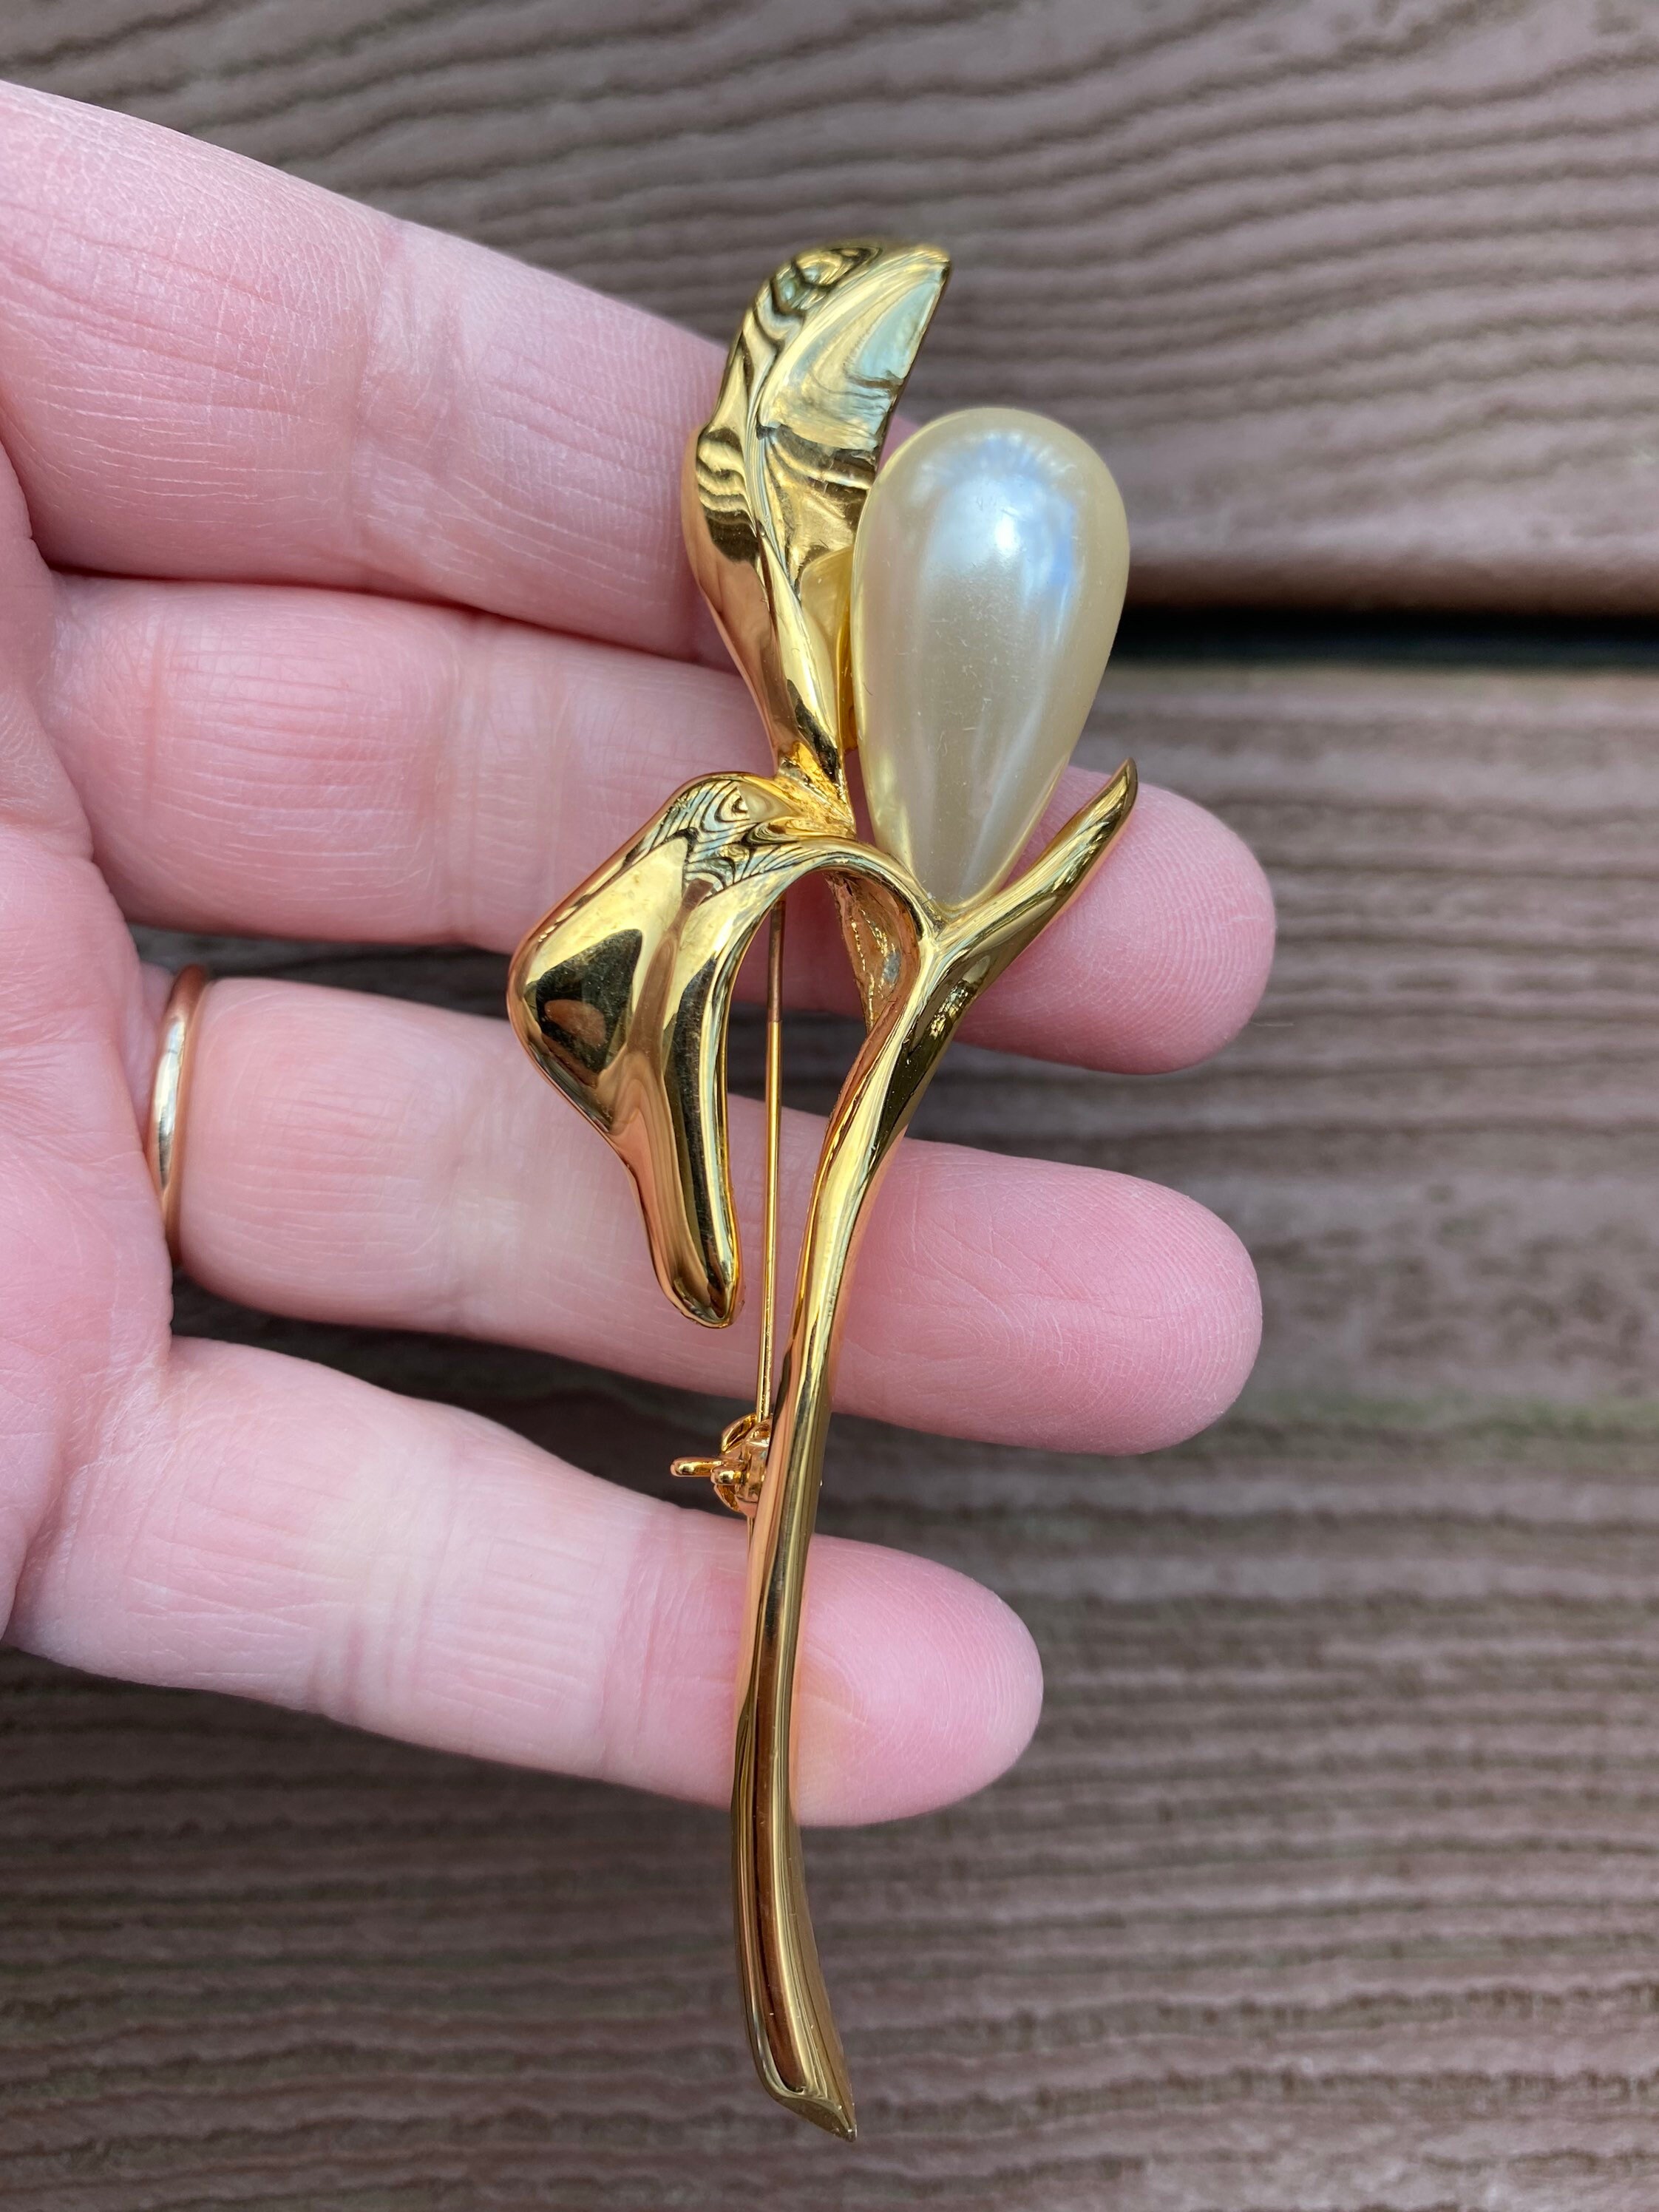 Vintage Gold Tone Pearl Flower Brooch pendent